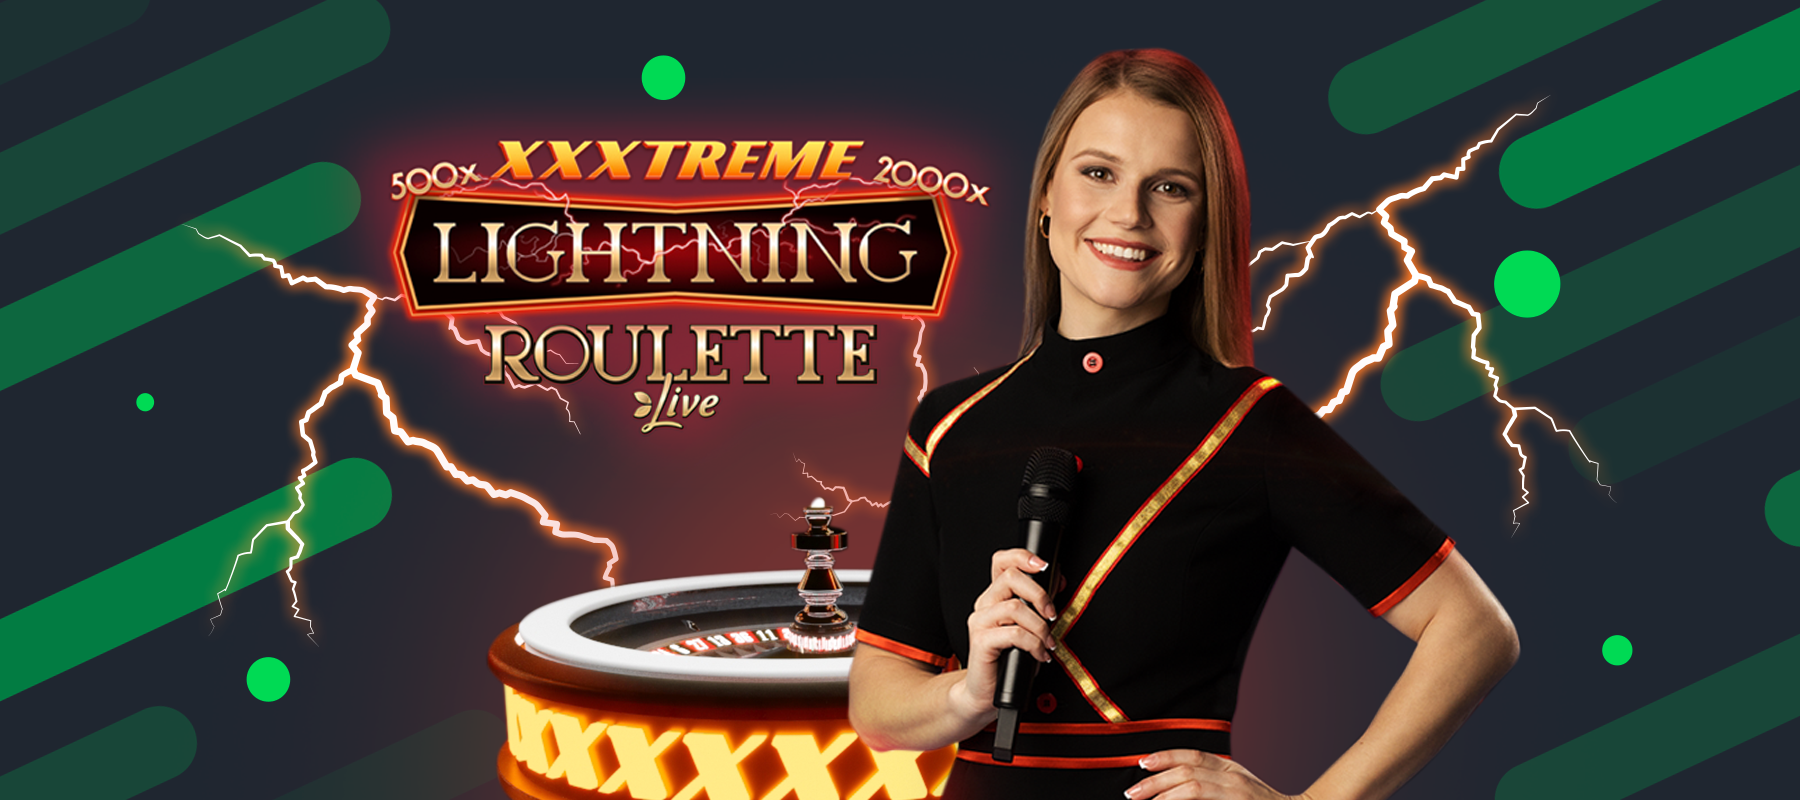 EvolutionのXXXtreme Lightning Rouletteがスポーツベットアイオーで先行新登場⚡